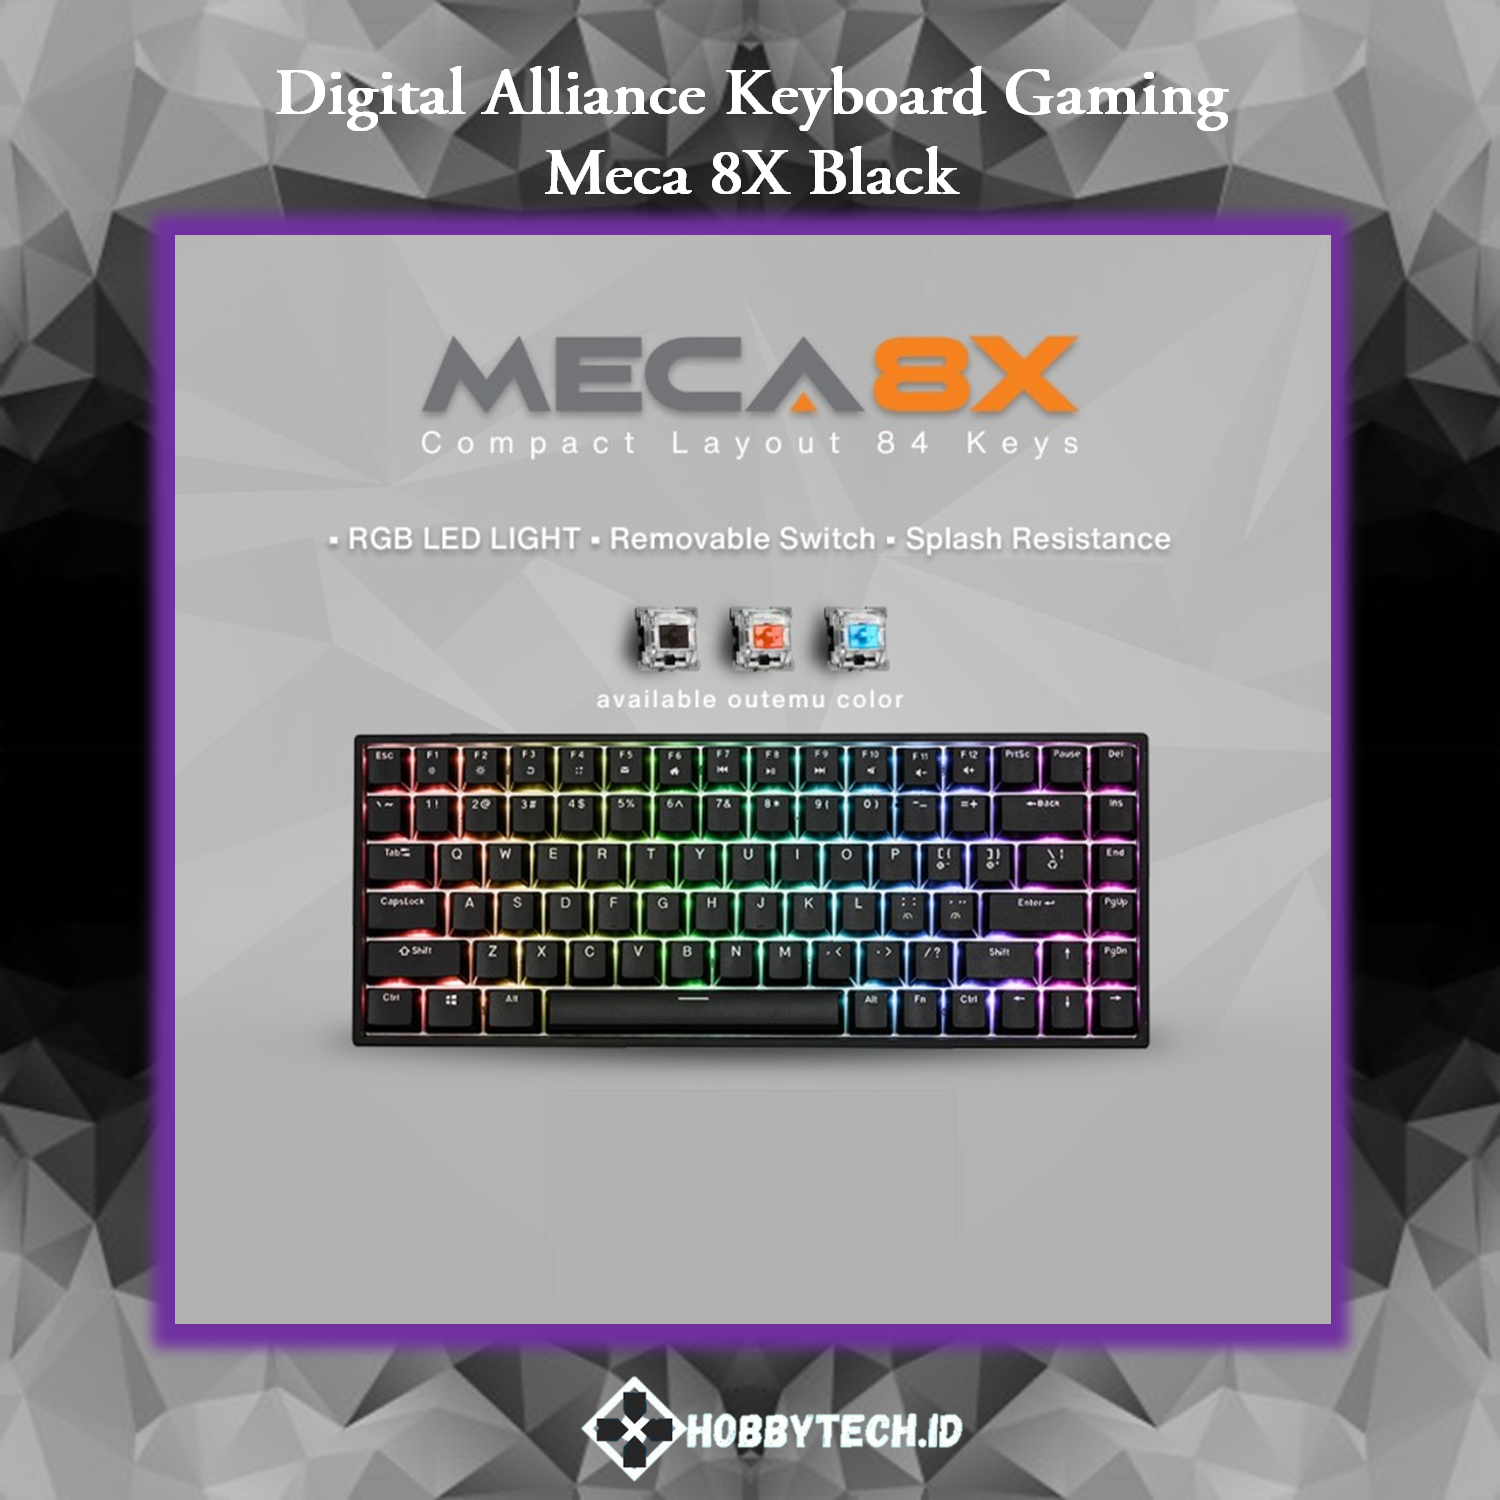 Digital alliance Keyboard Gaming Meca 8X Black